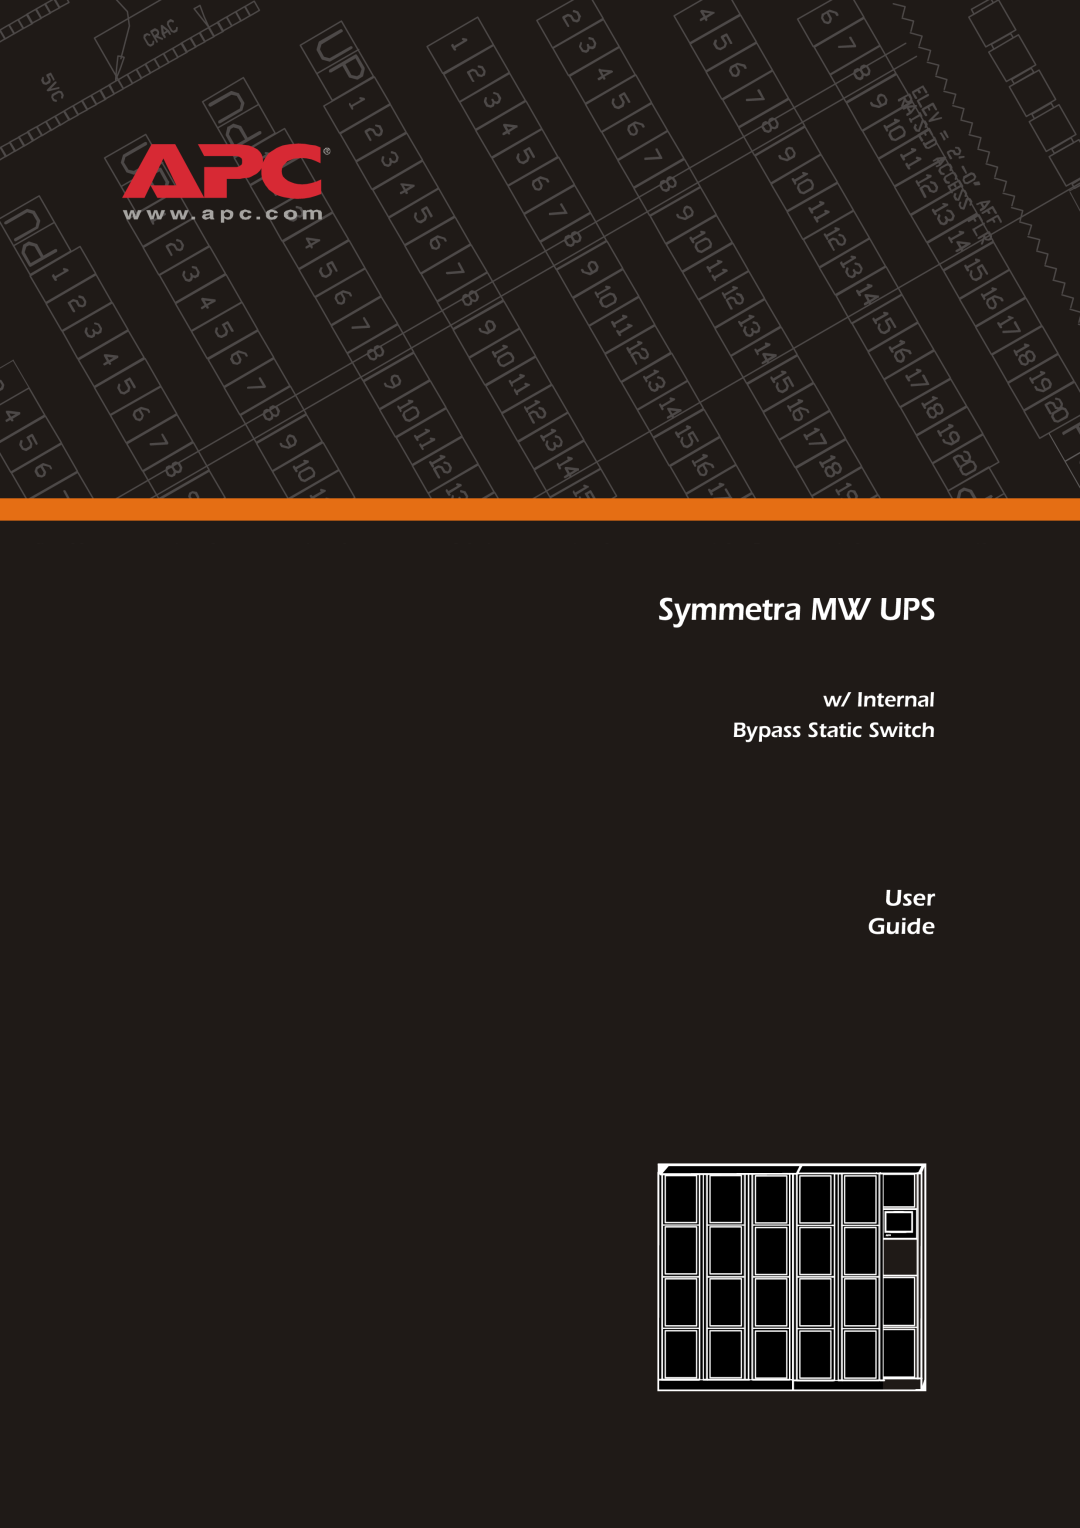 American Power Conversion manual Symmetra MW UPS, User Guide, w/ Internal Bypass Static Switch 